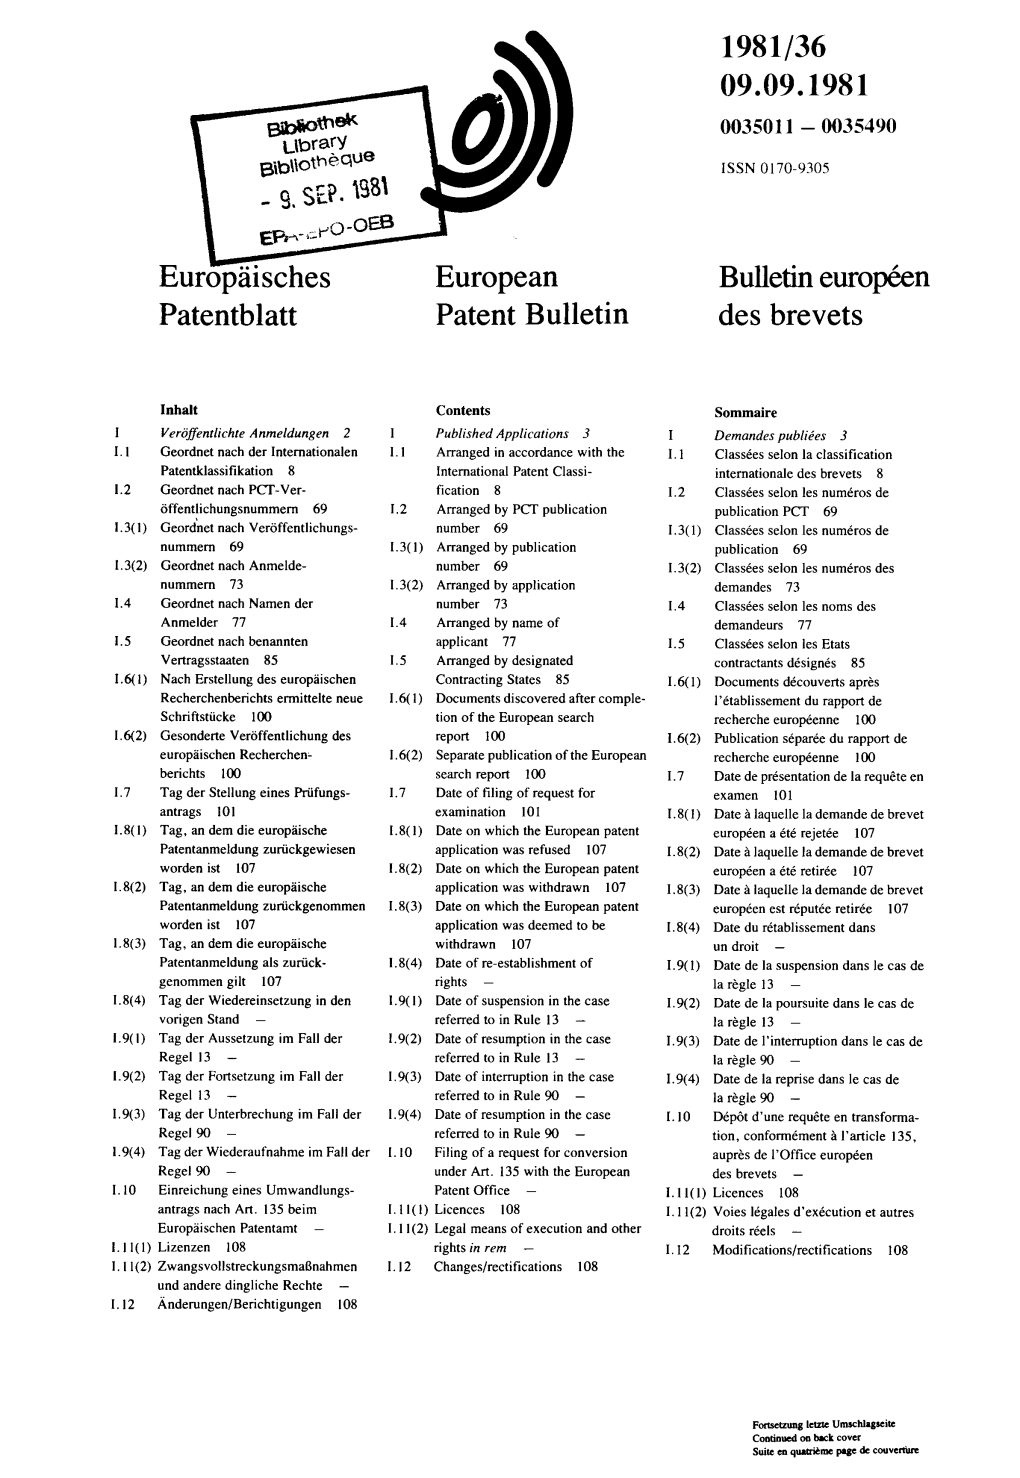 European Patent Bulletin 1981/36